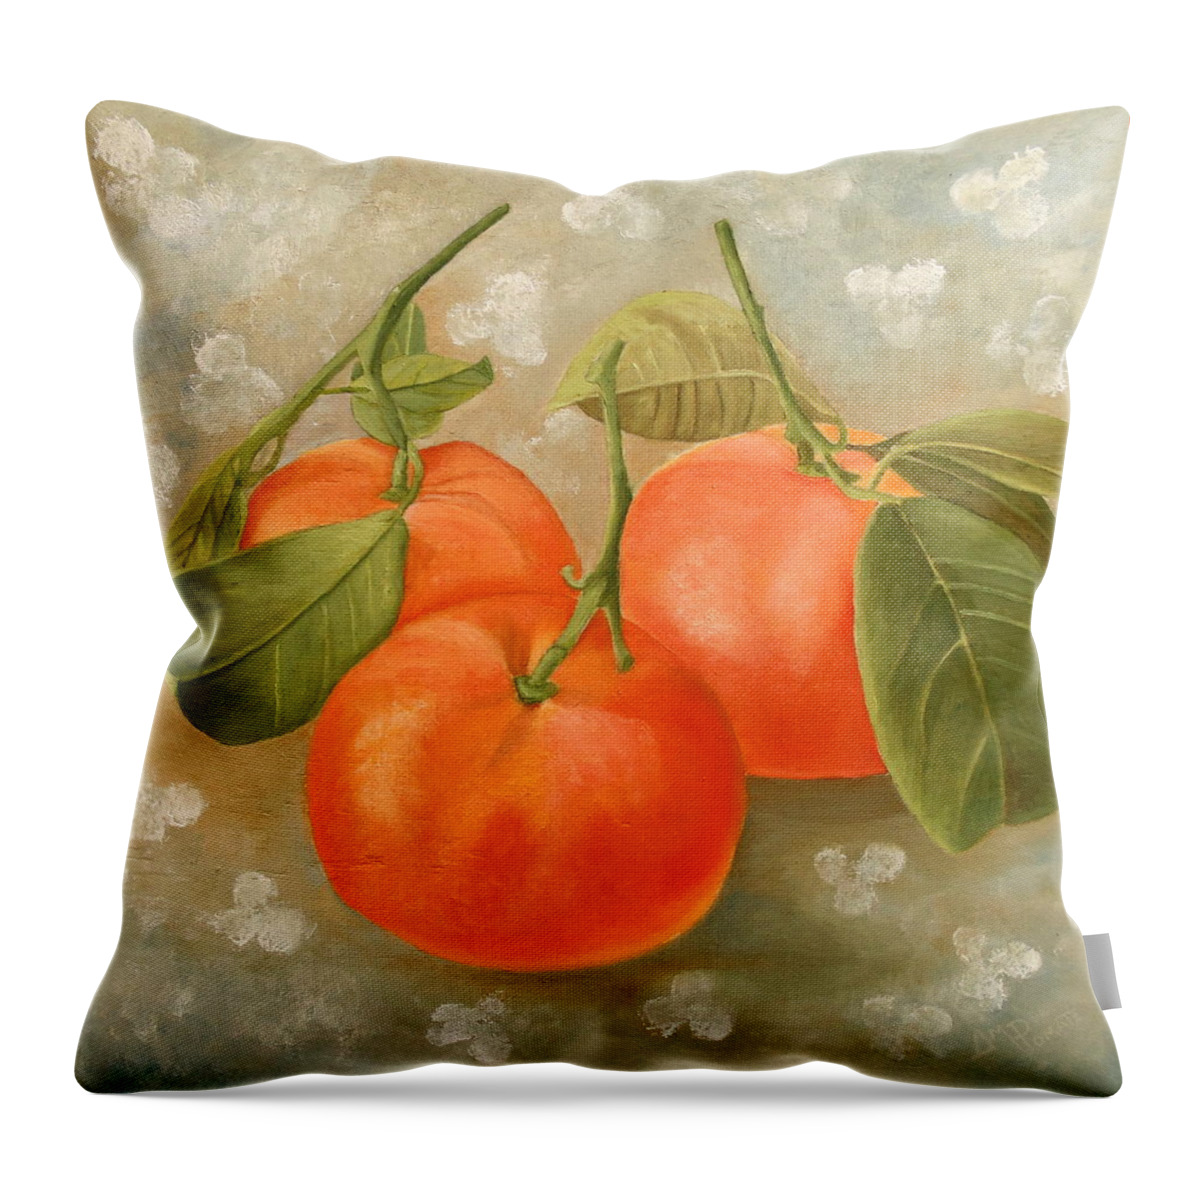 Mandarin Throw Pillow featuring the painting Mandarins by Angeles M Pomata